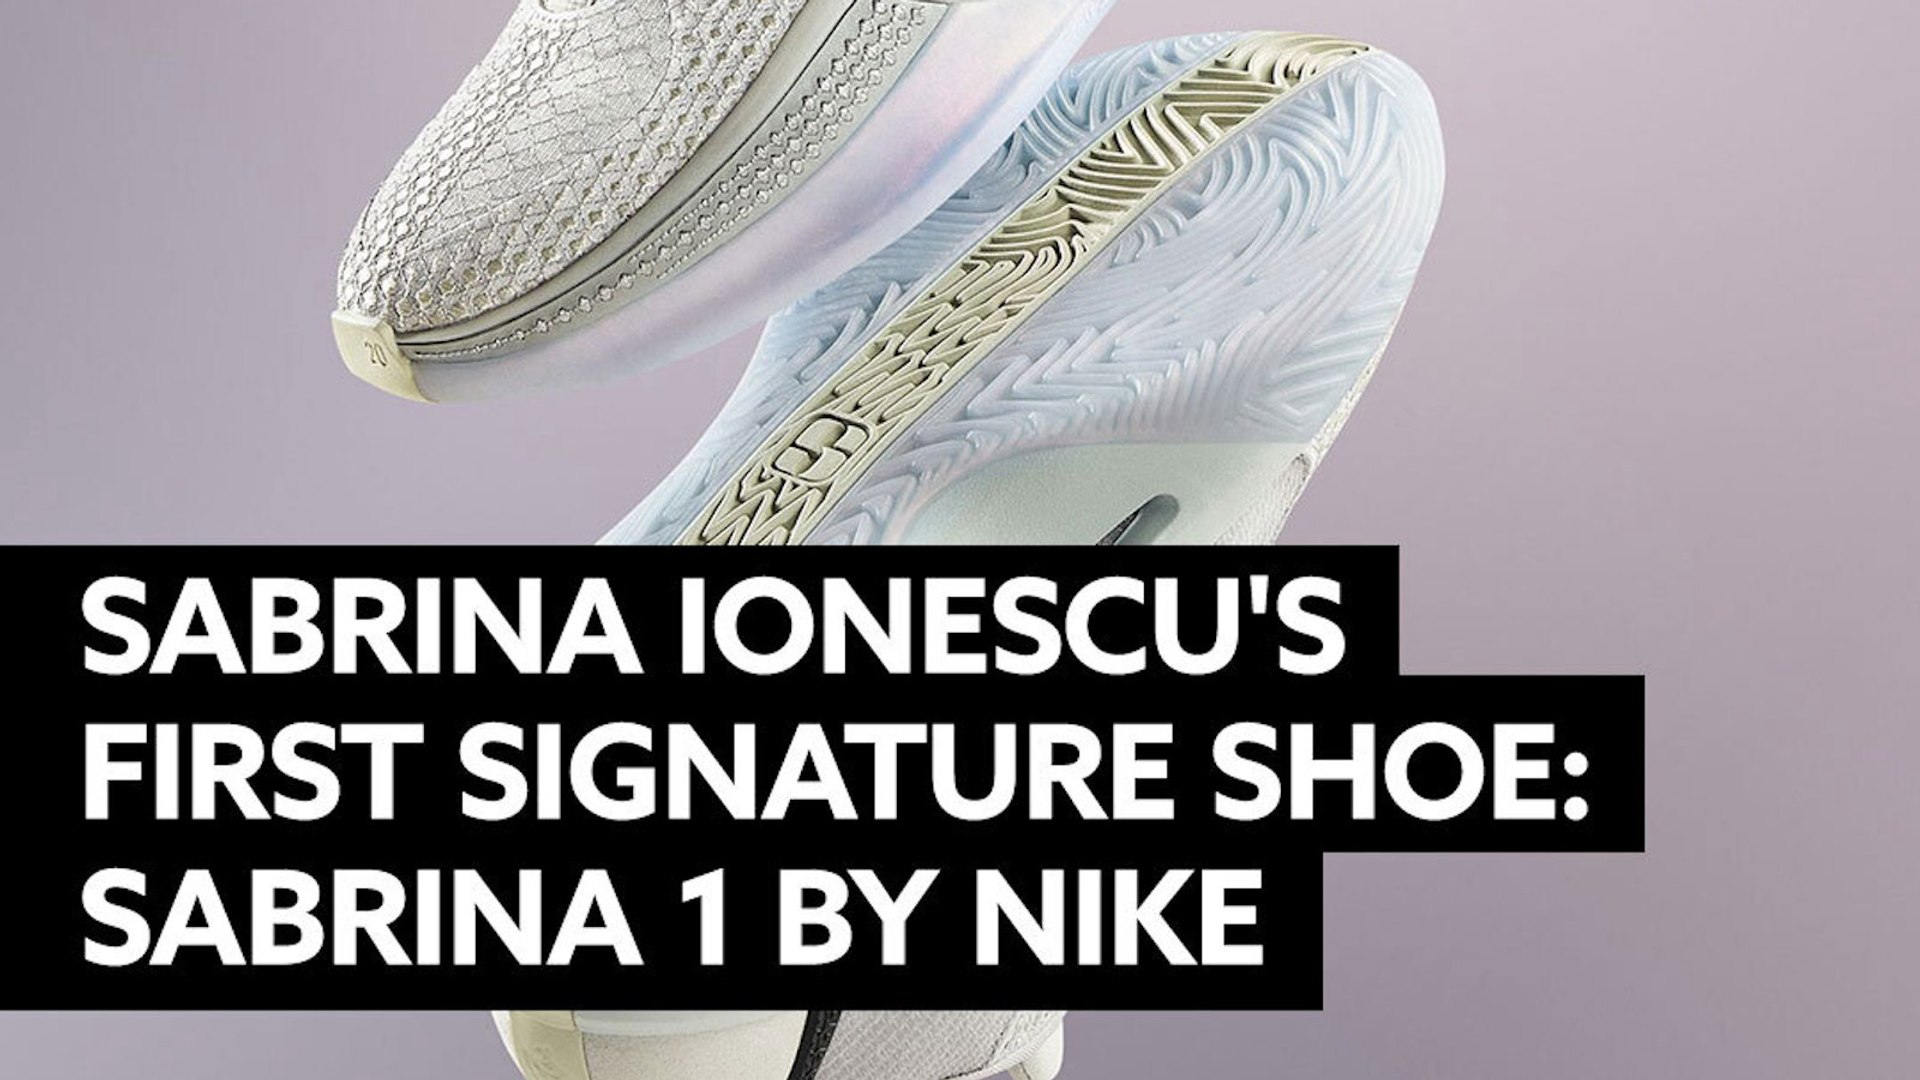 Sabrina Ionescu headlines her first shoe as Nike's next star